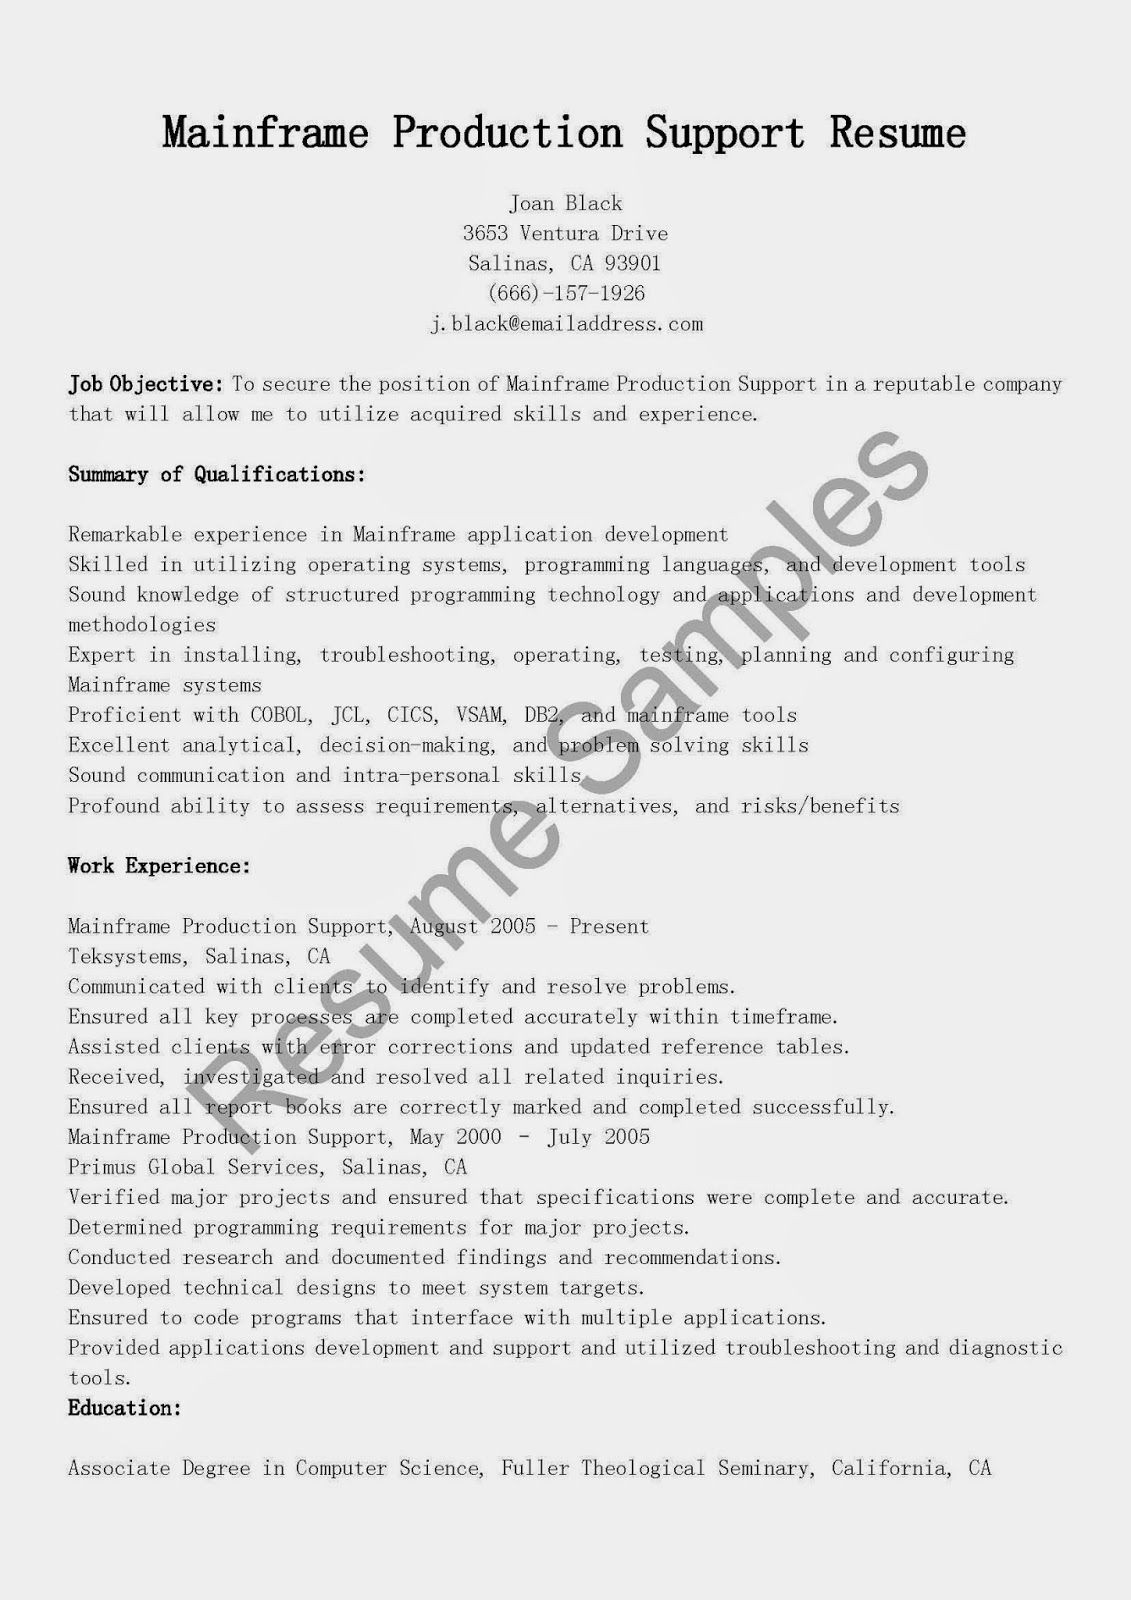 Sample Resume for Mainframe Production Support Mainframe Production Support Resume Sample Resume, Sample Resume …